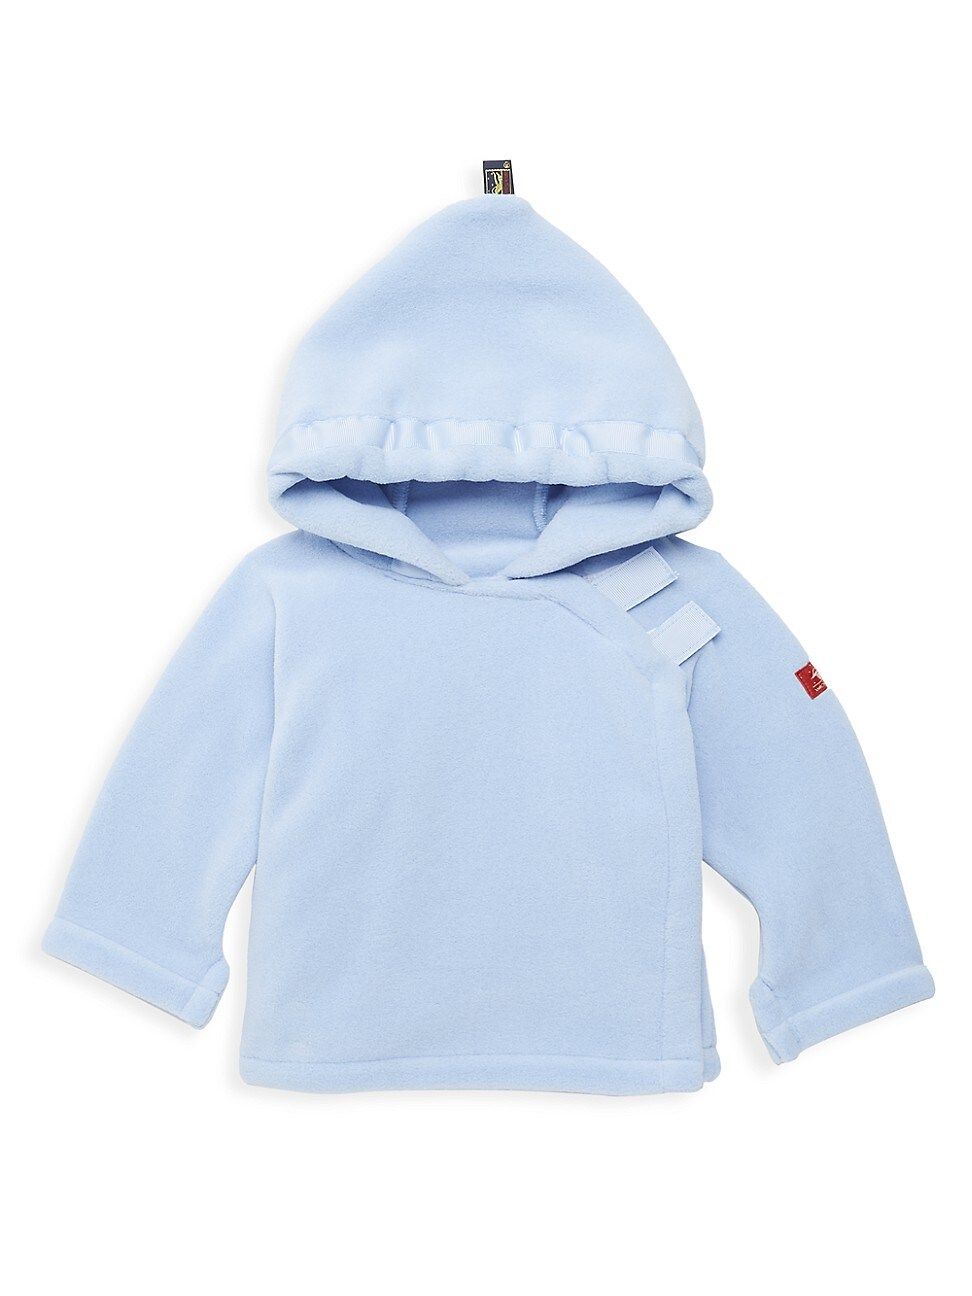 Baby's Warmplus Favorite Jacket - Light Blue - Size 24 Months | Saks Fifth Avenue